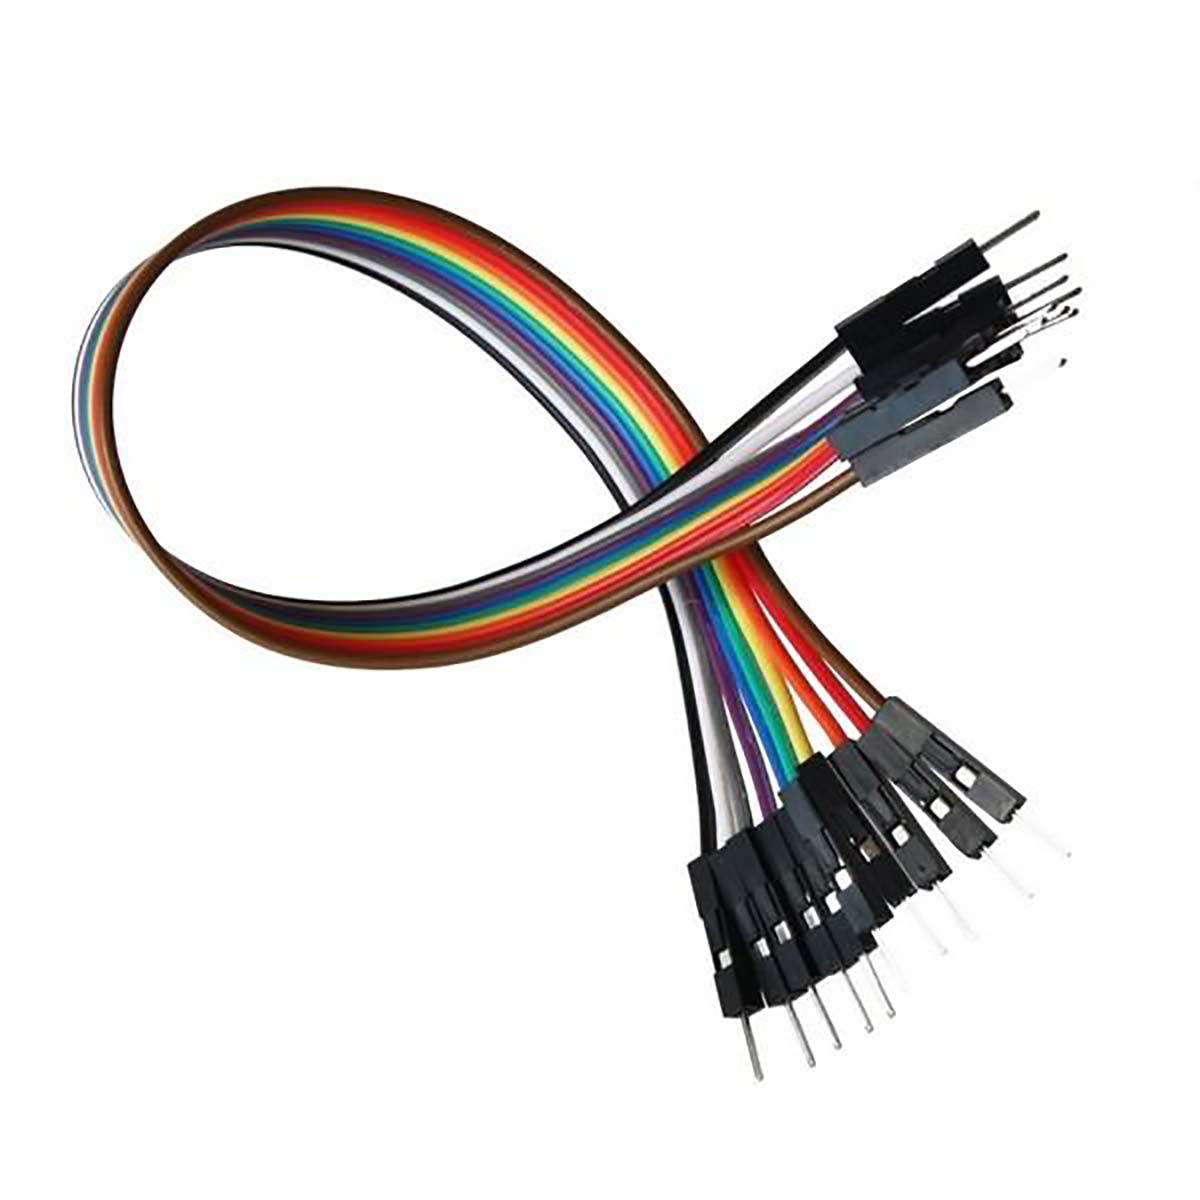 4110-40, 200mm Jumper Wire Breadboard Jumper Wire in Black, Blue, Red, White, Yellow